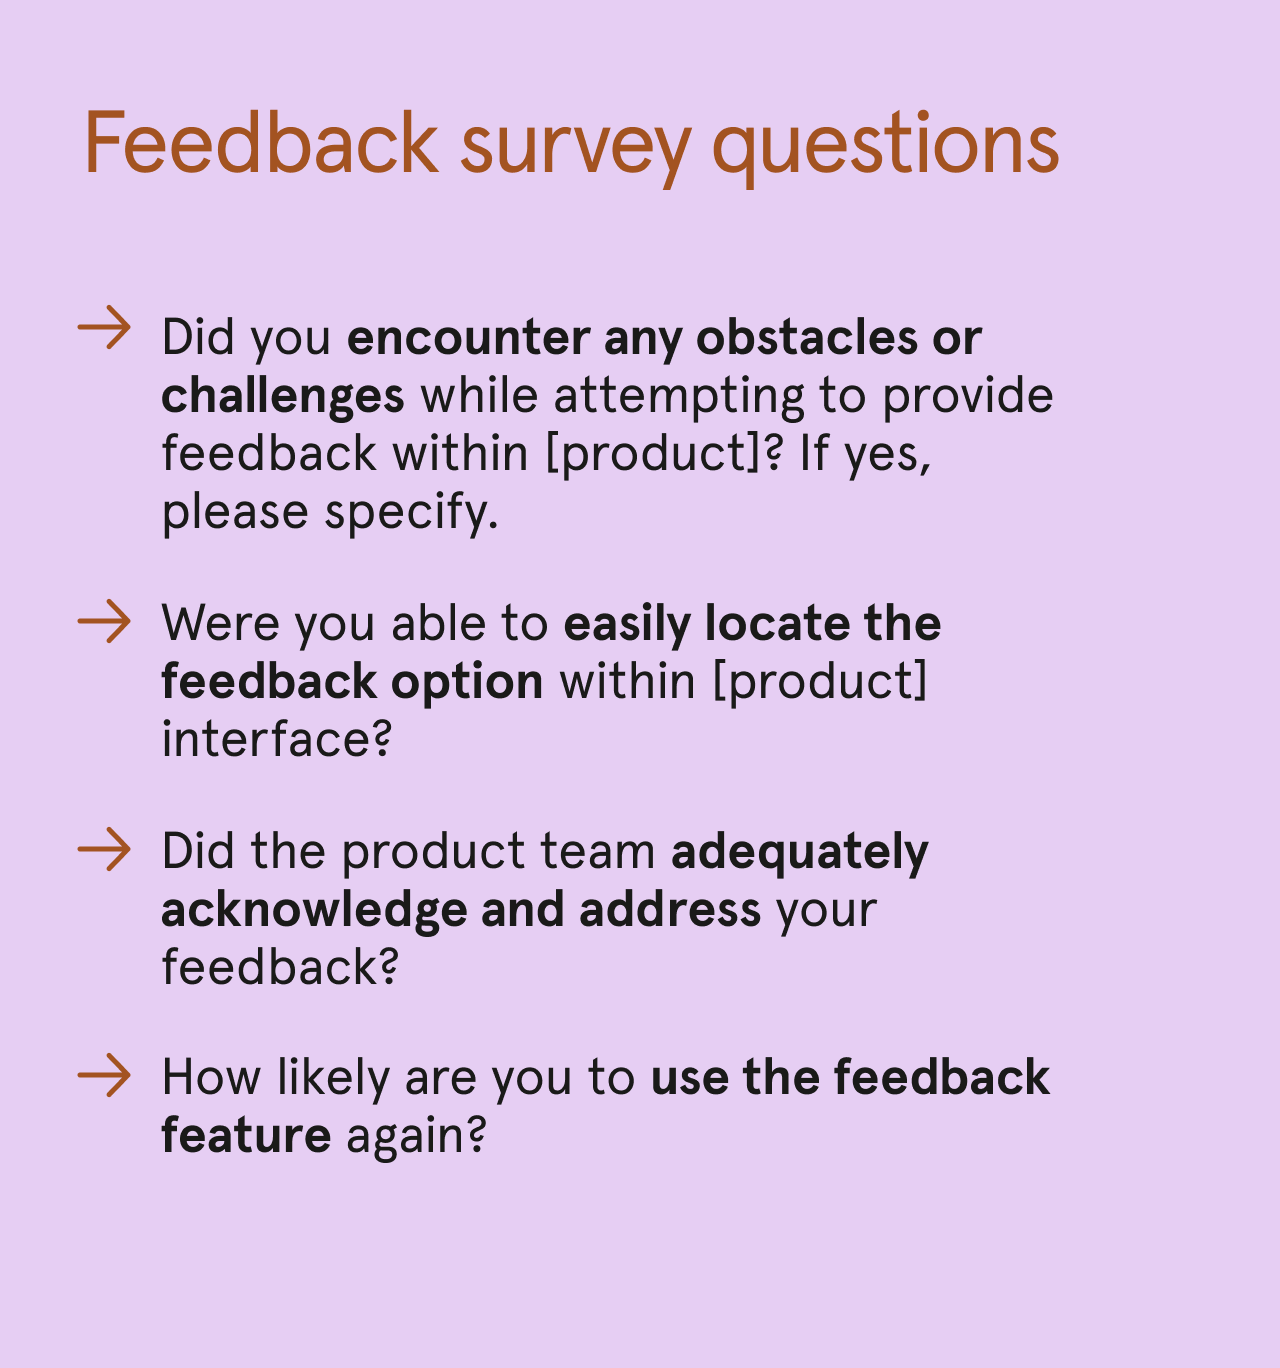 List of feedback survey questions.